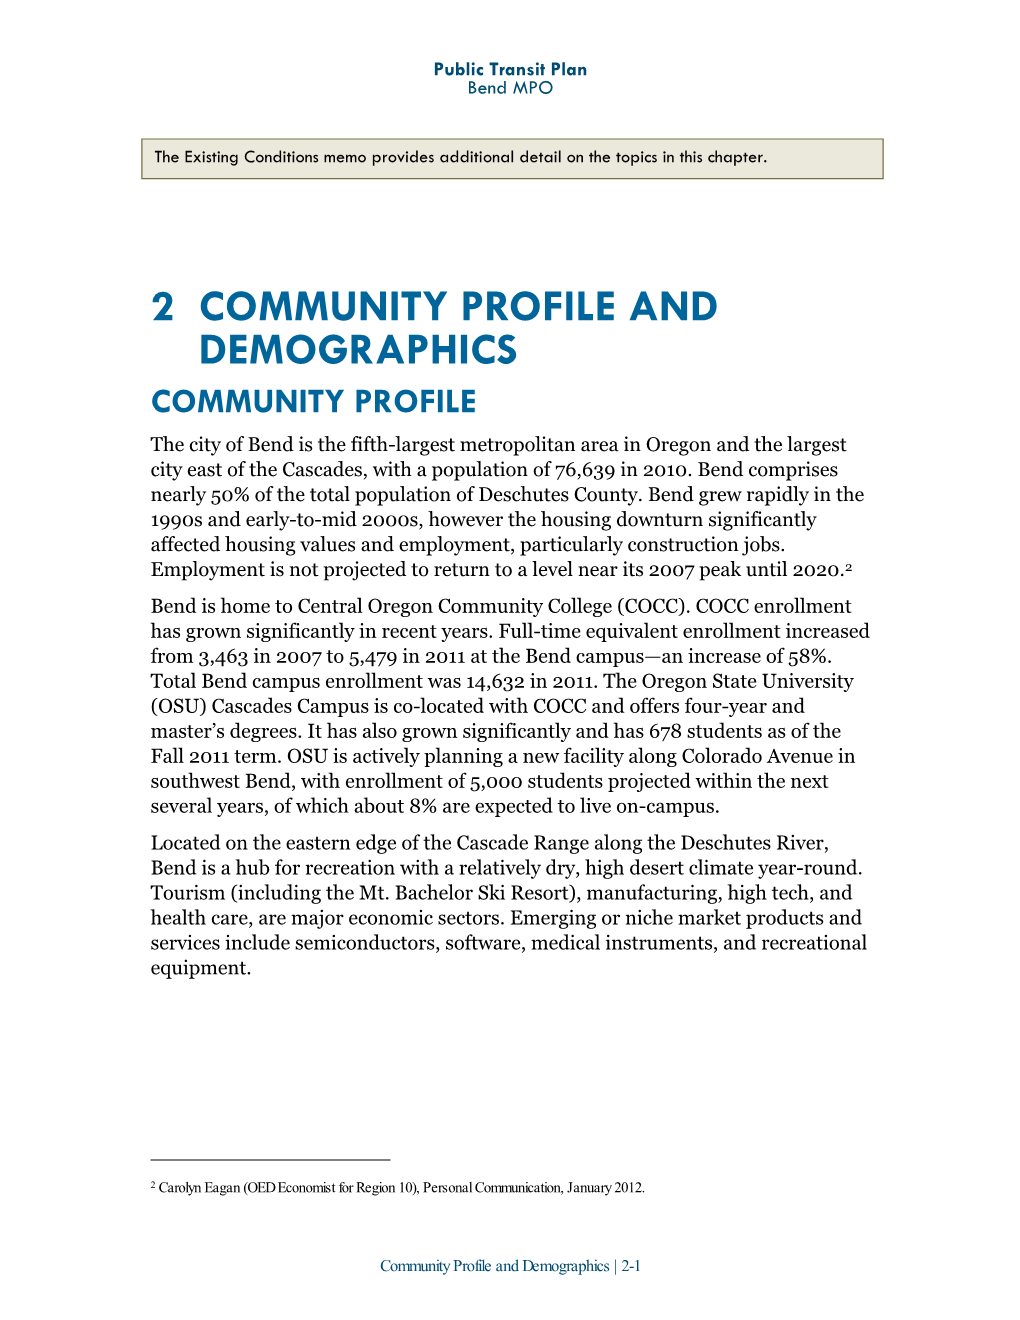 2 Community Profile and Demographics